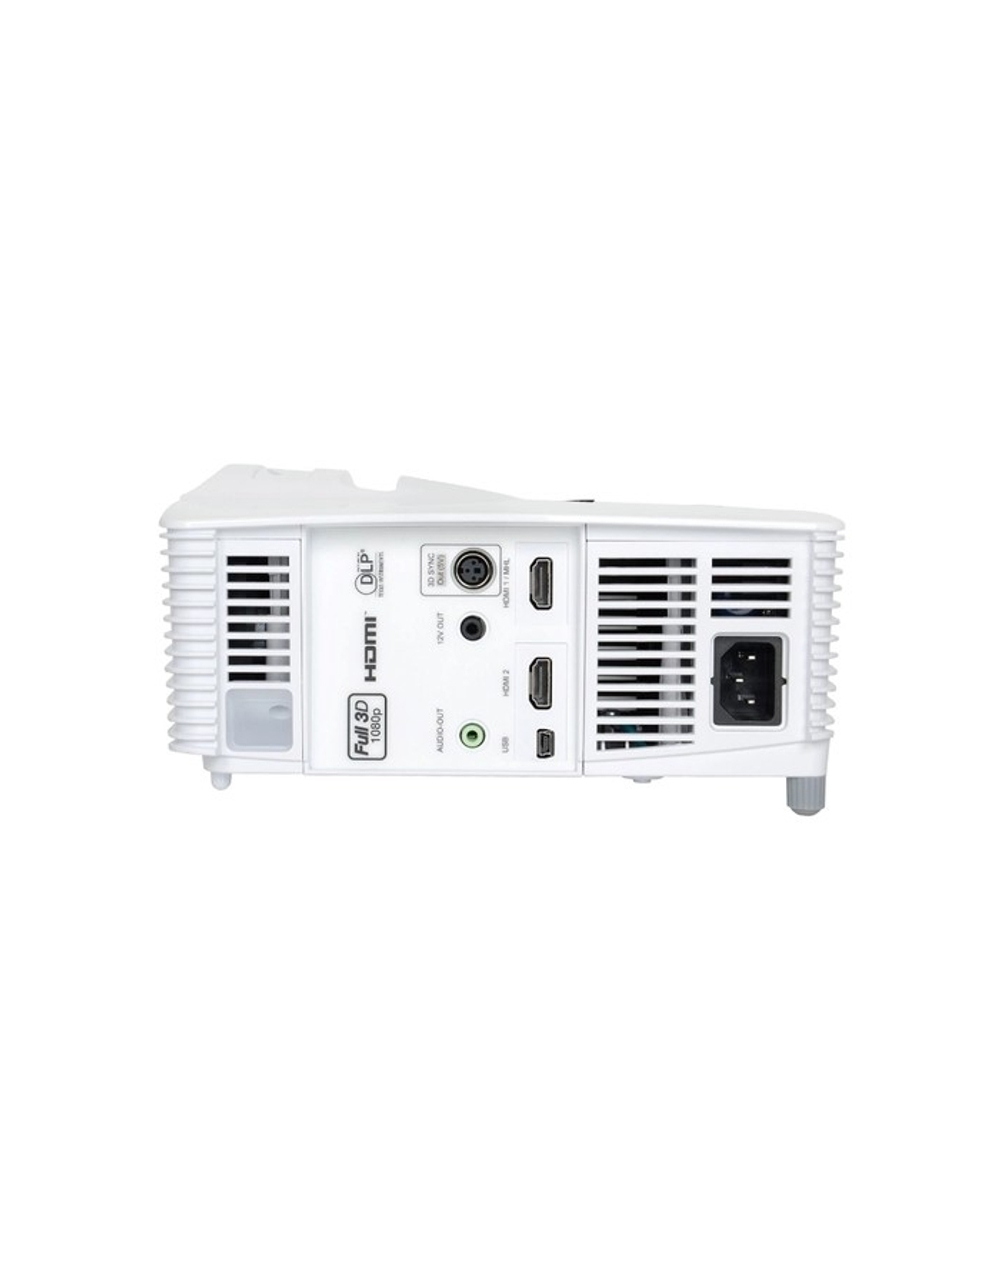 Optoma GT1070Xe короткофокусный проектор белый (DLP 1080p 1920x1080, 2800Lm, 23000:1, 2xHDMI, MHL, 1x10W speaker, 3D Ready, lamp 6500hrs, short-throw)